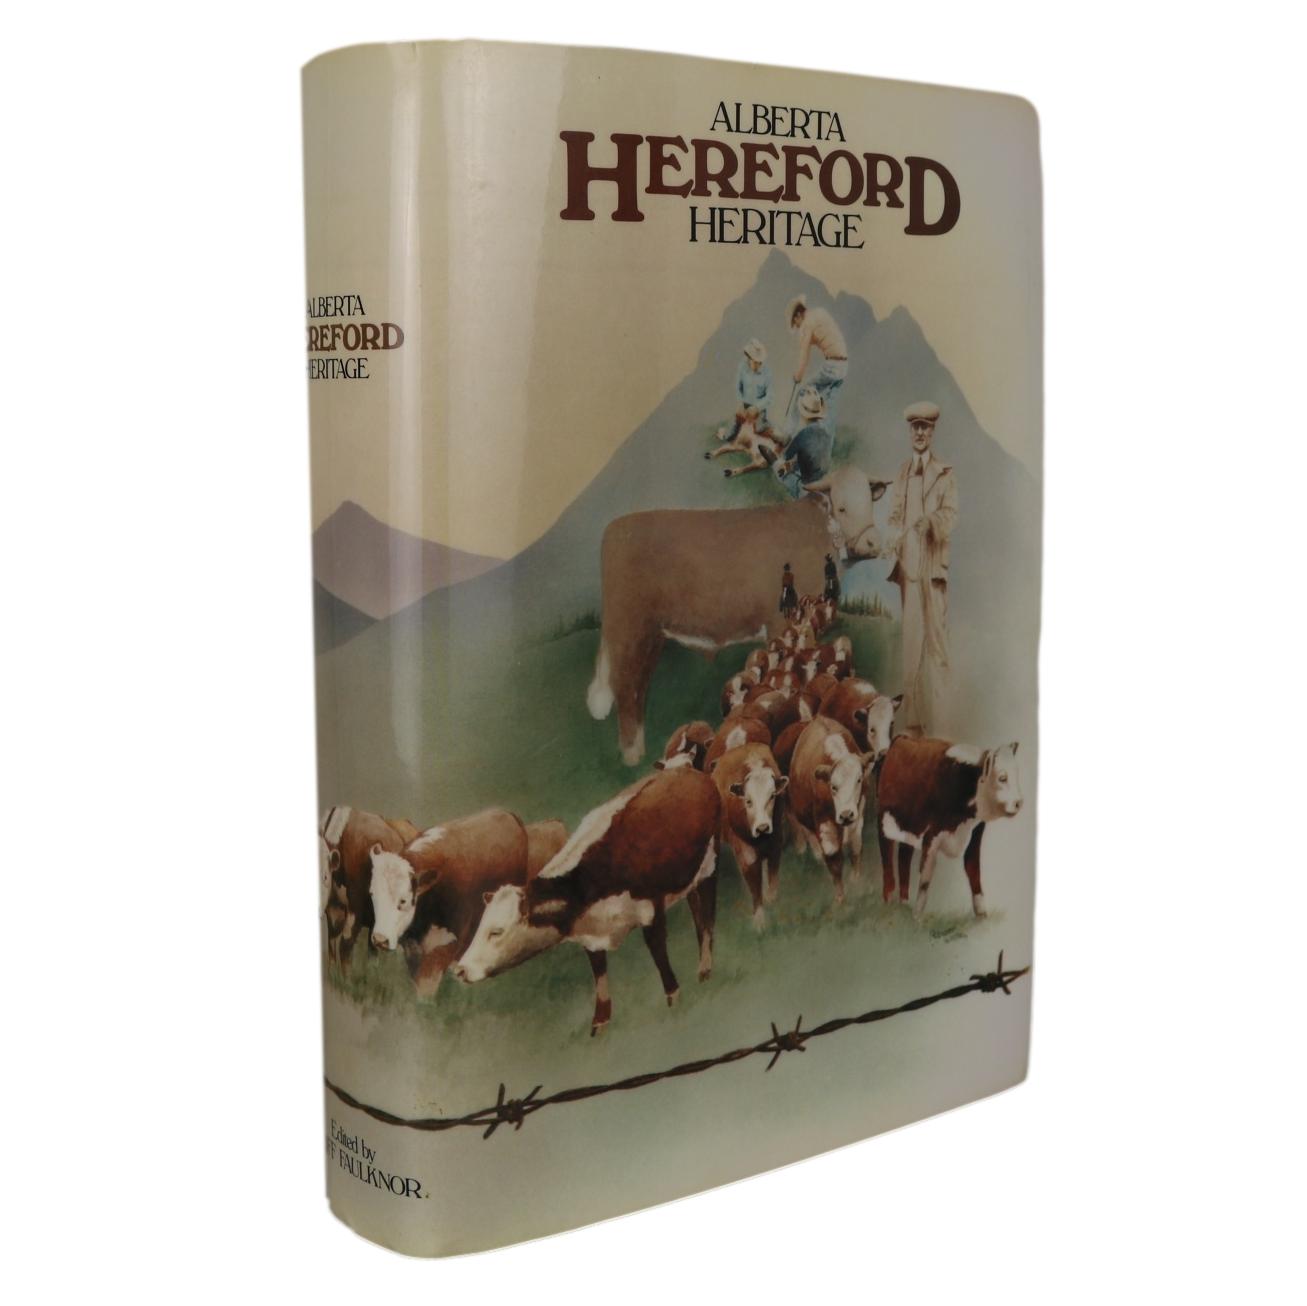 Alberta Hereford Heritage Cattle Breeding Canada Canadian Livestock Farming Used Book